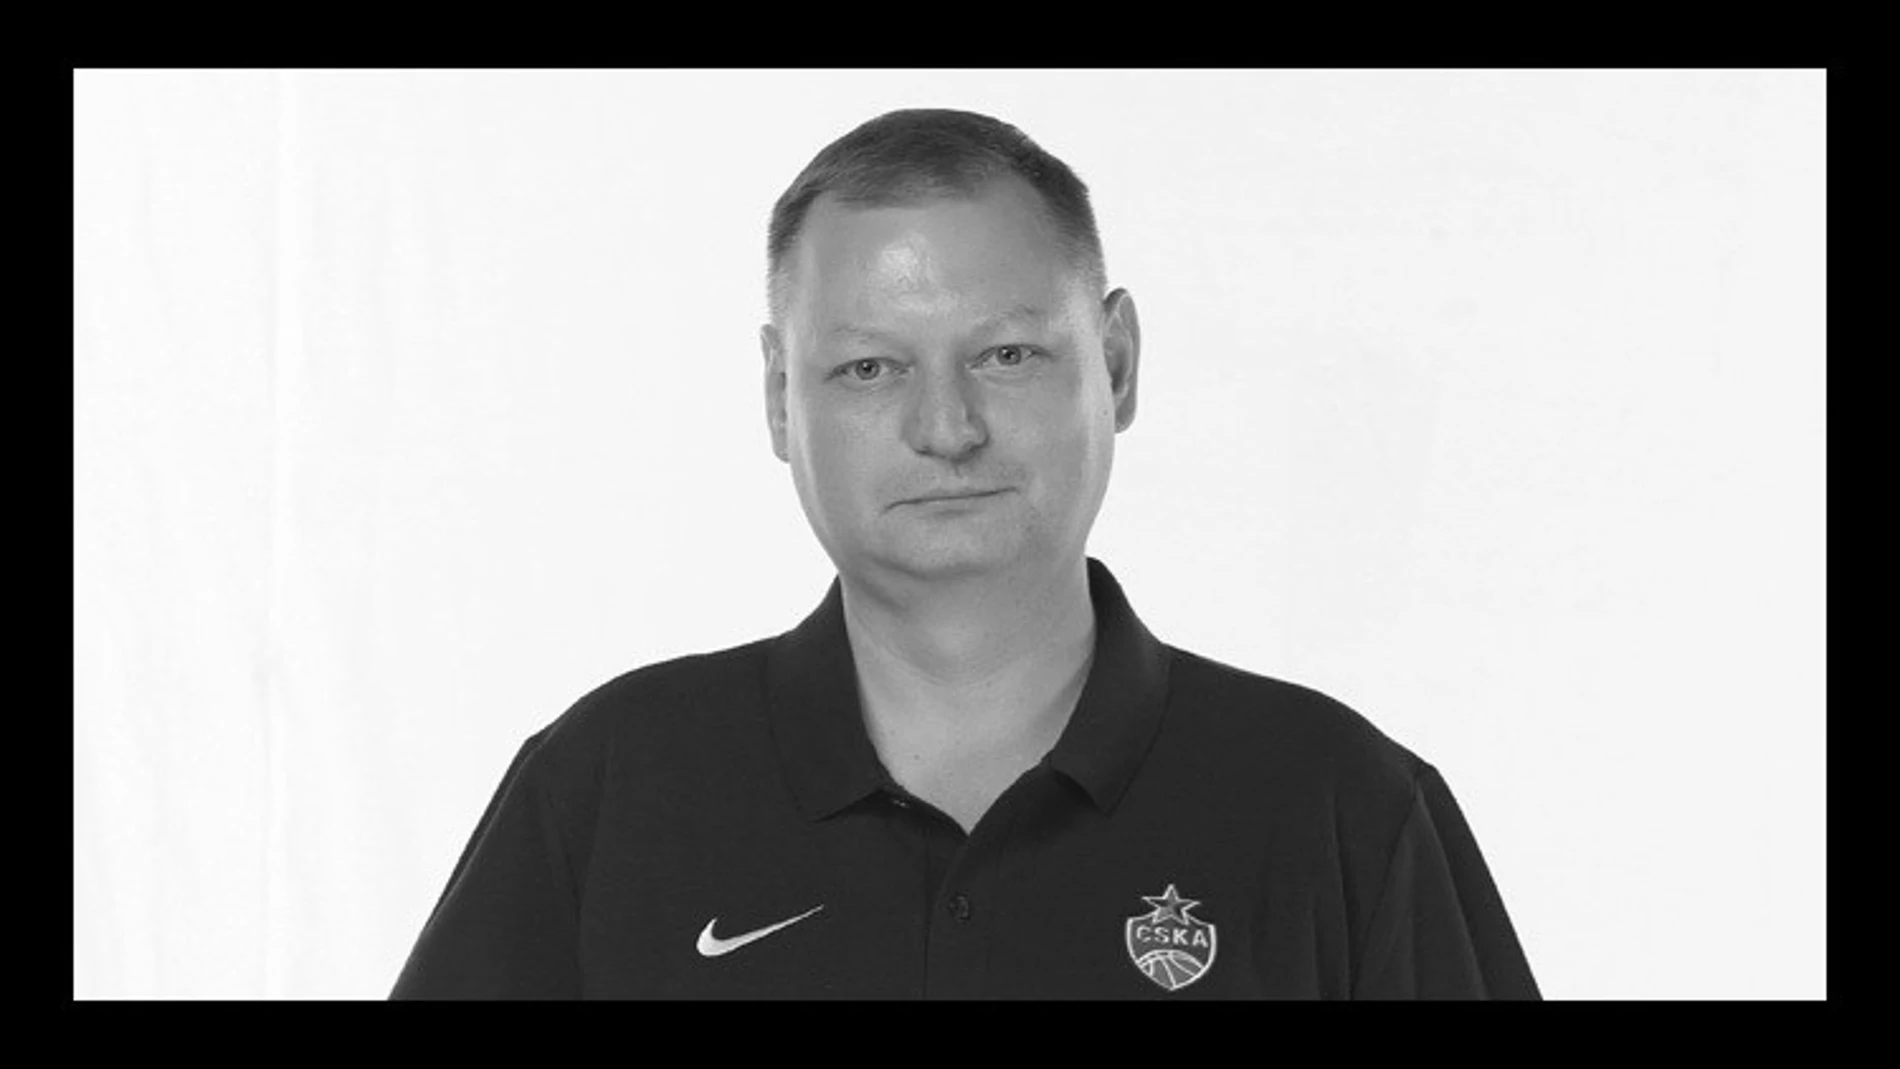 Baloncesto.- Fallece del médico del CSKA por coronavirus